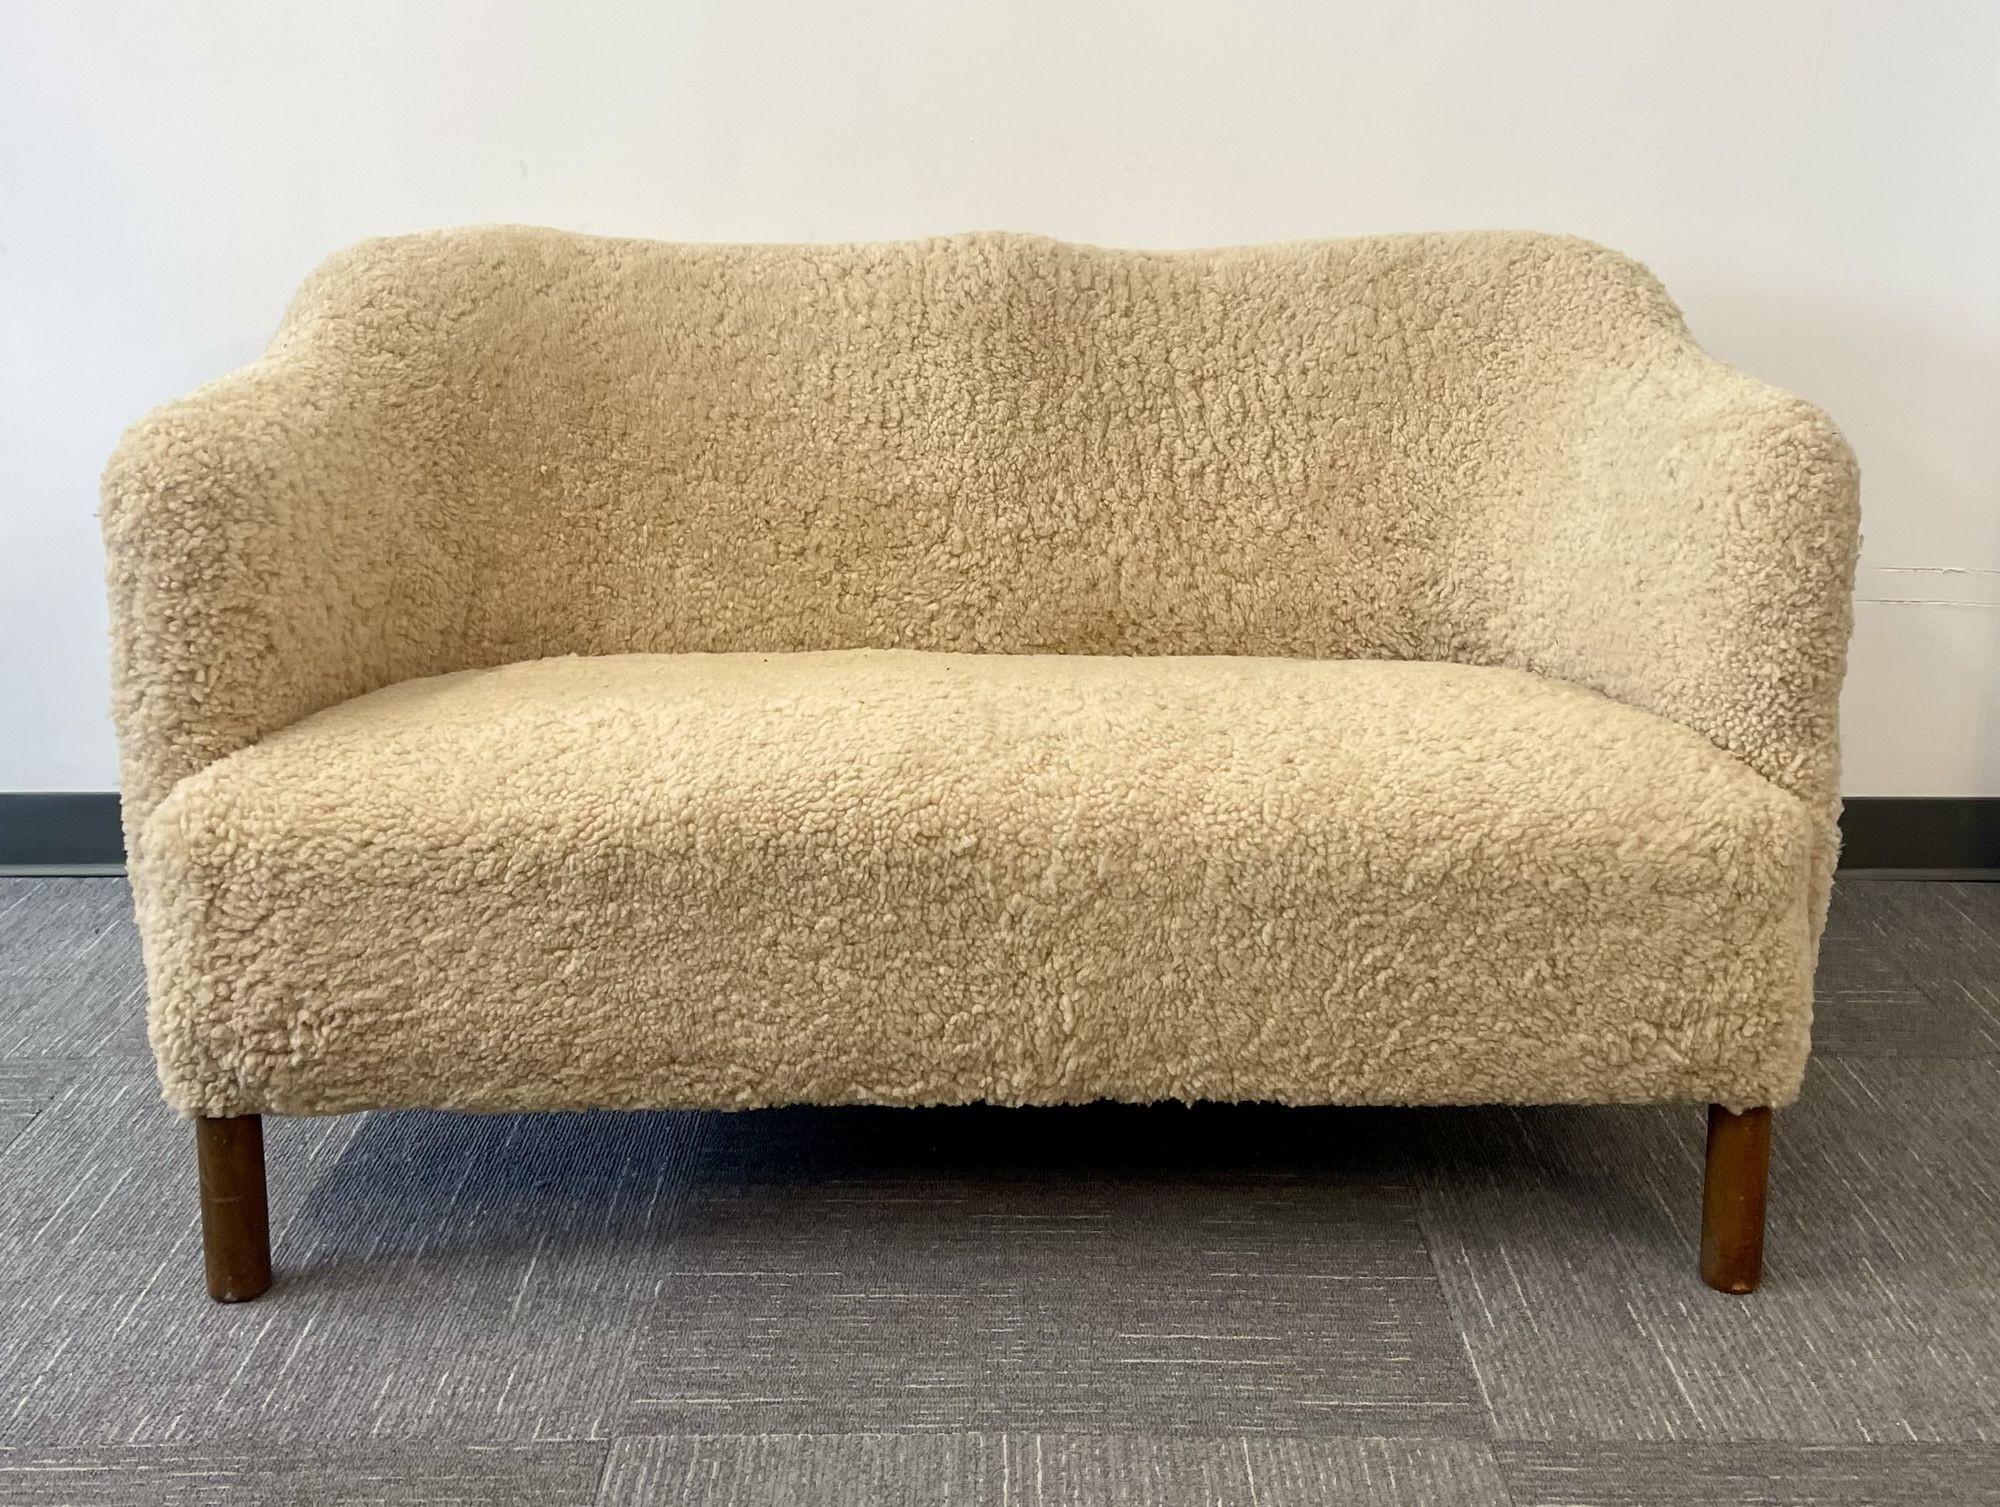 20th Century Mid-Century Modern Two-Seater Sofa / Settee, Sheepskin, Danish Cabinet Maker